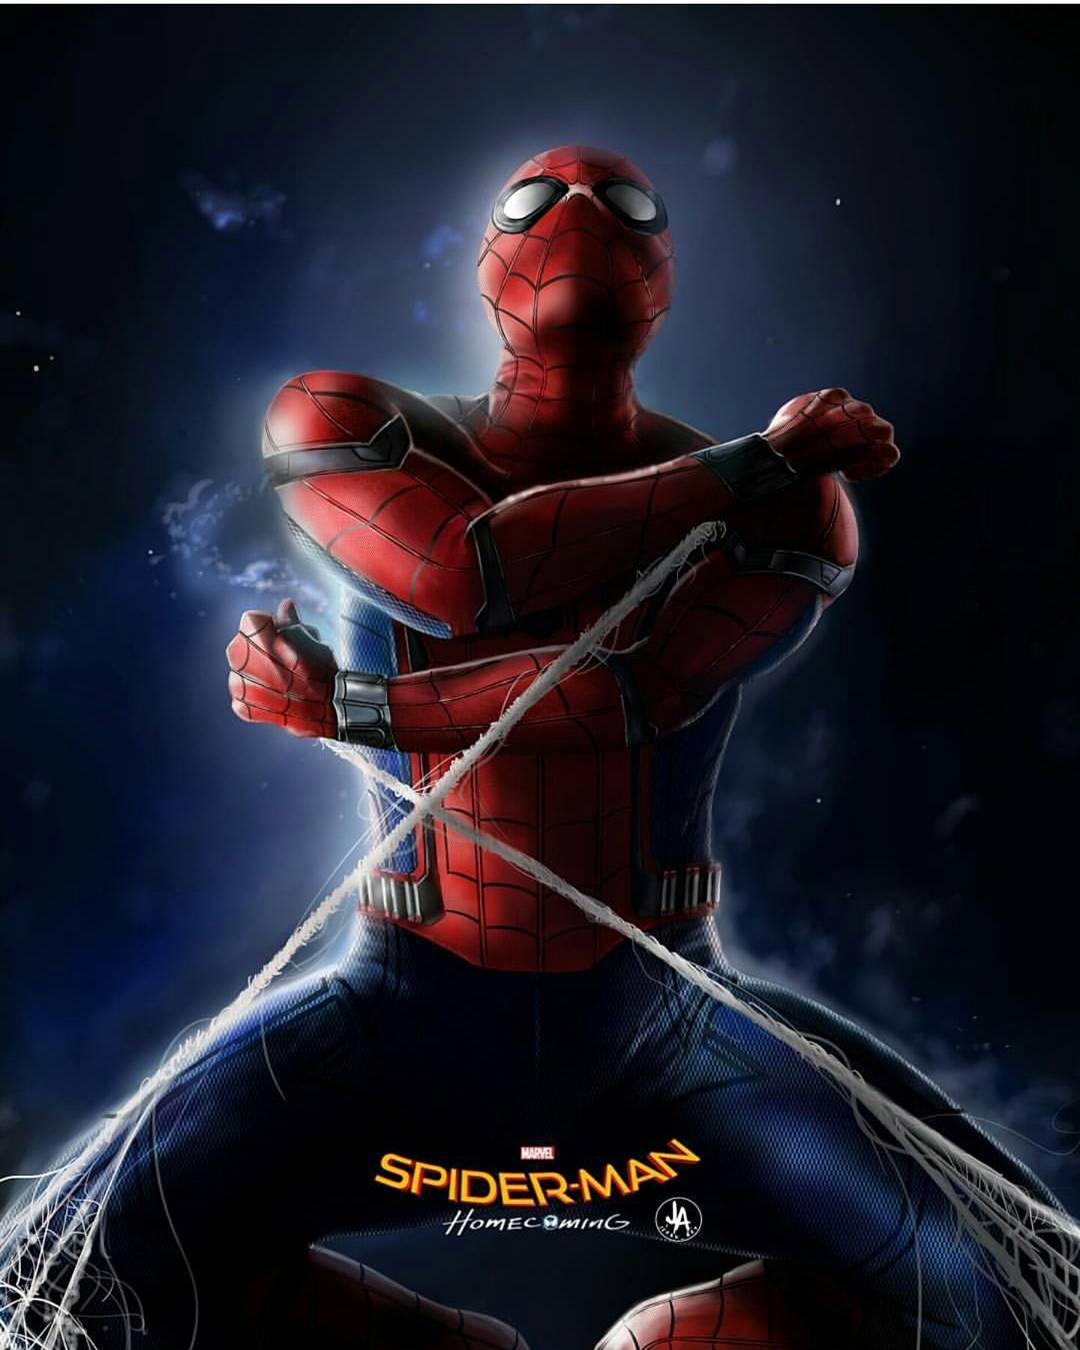 Hd Spiderman Homecoming 2017 Movie Still Wallpapers